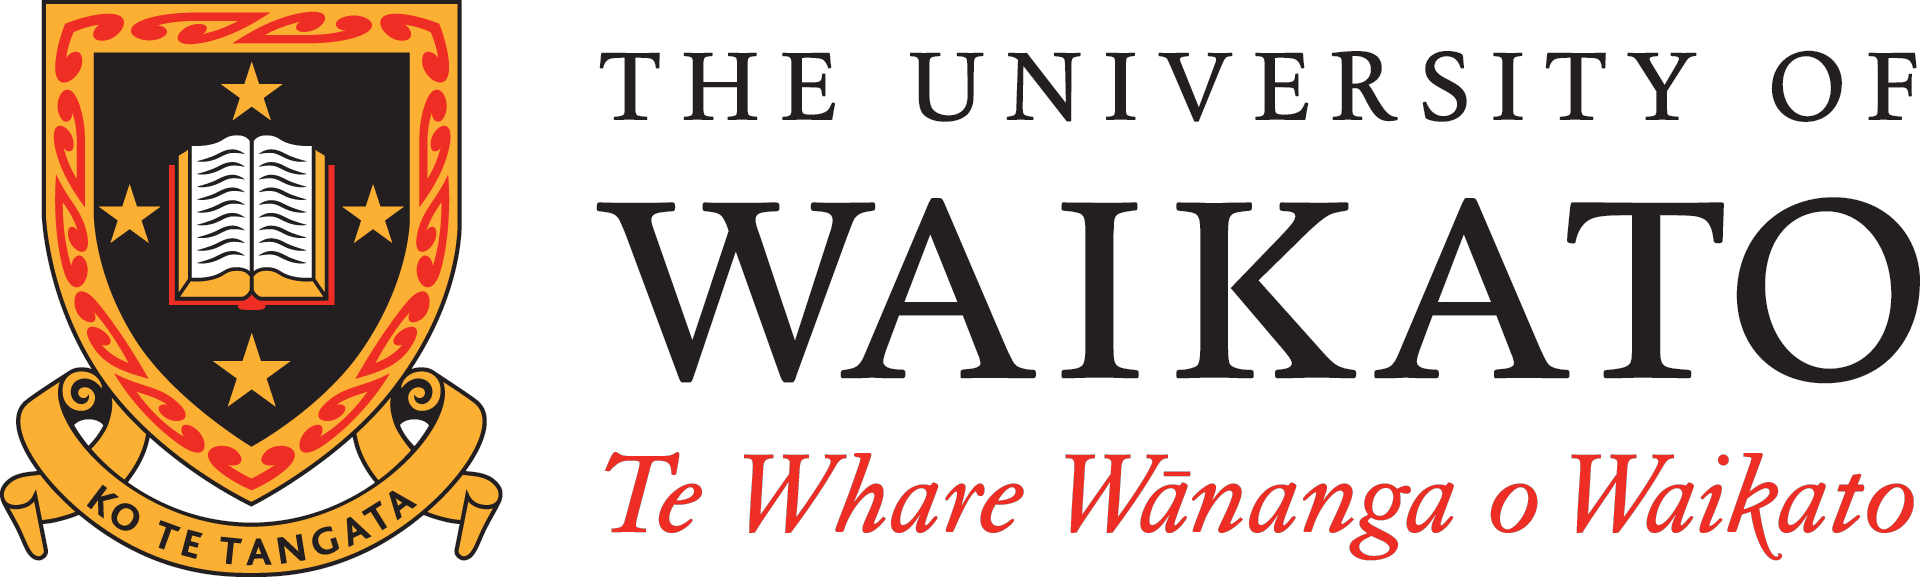 UoW logo colour